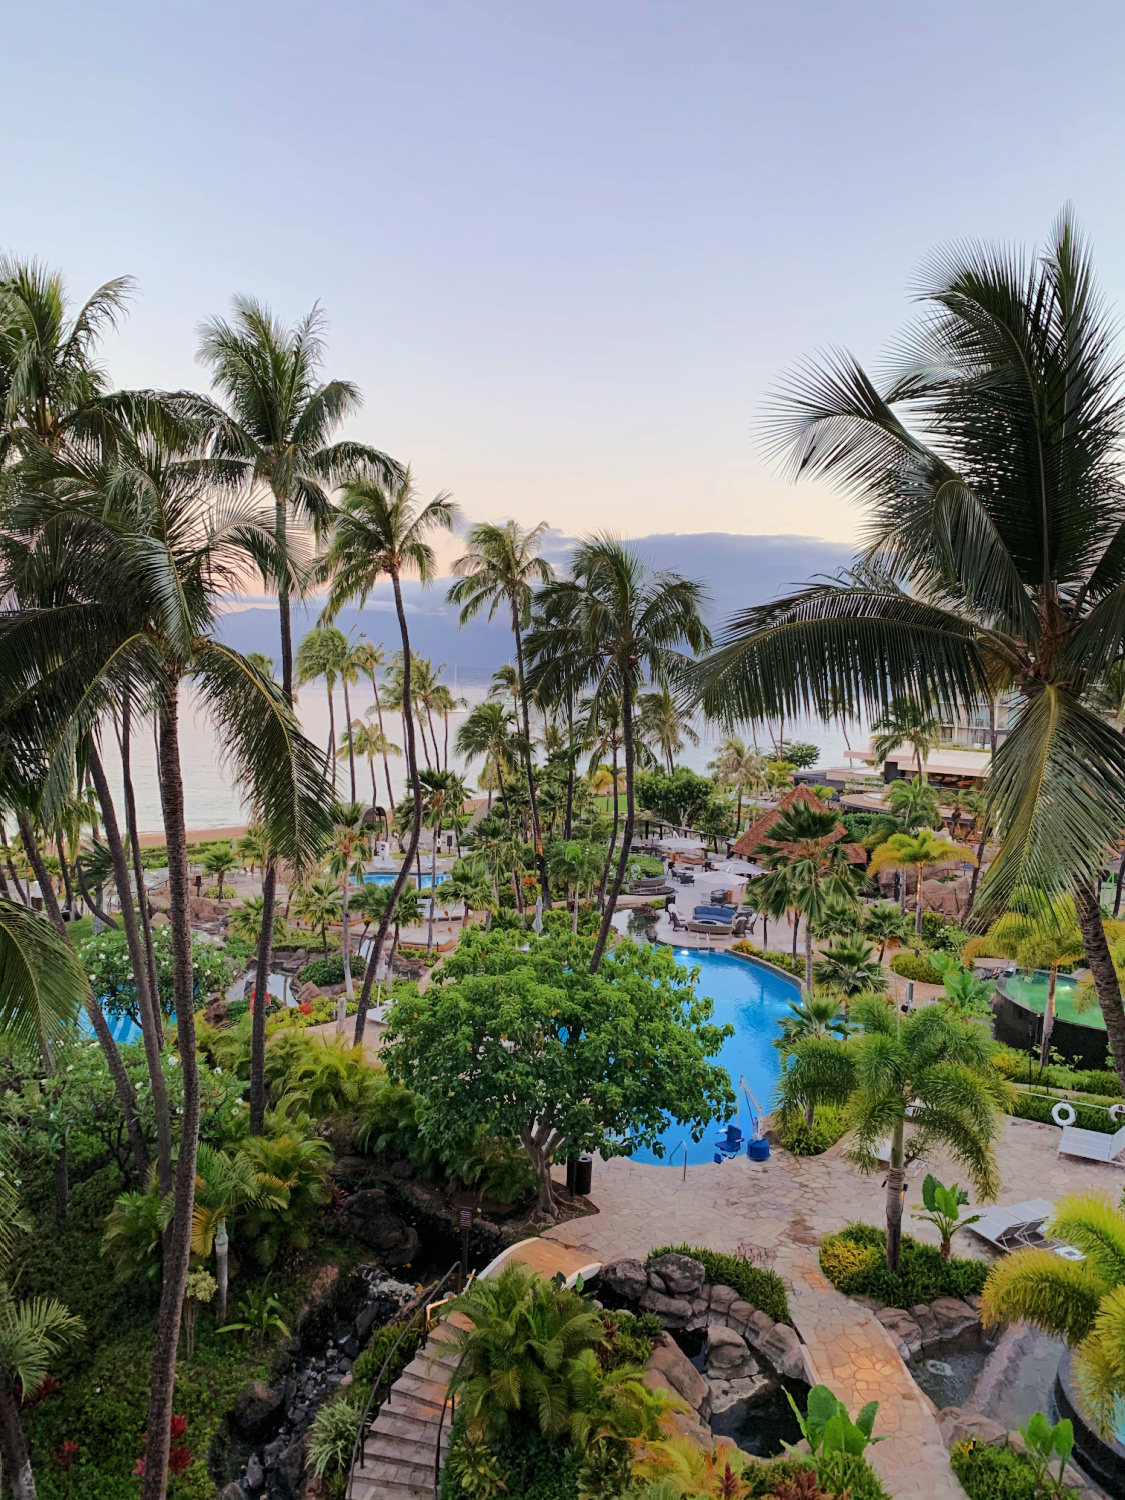 Maui Travel Guide